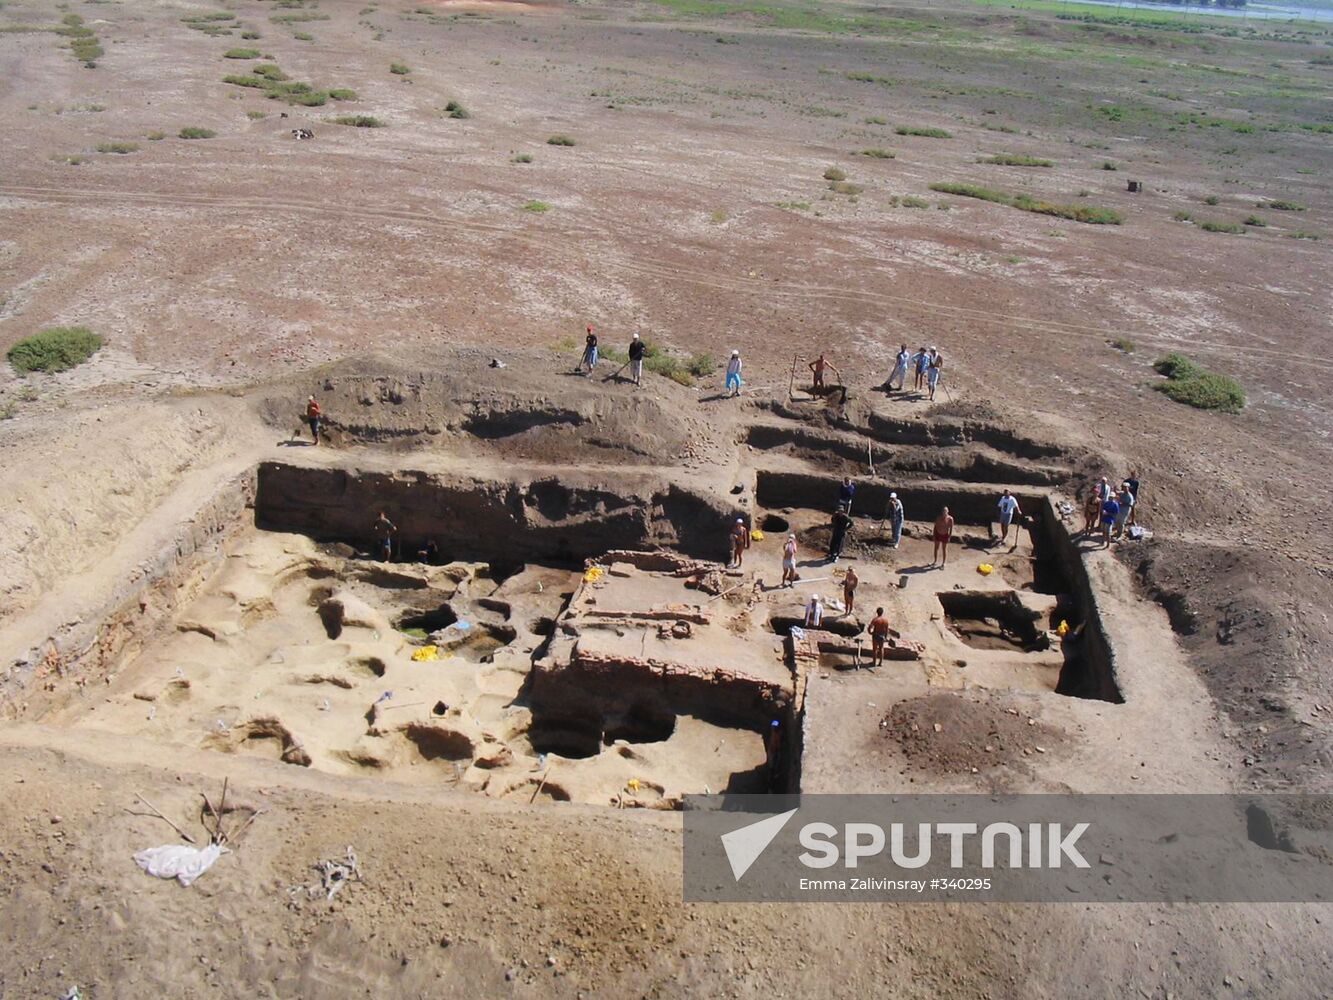 Ancient capital of Khazar Kaganate found